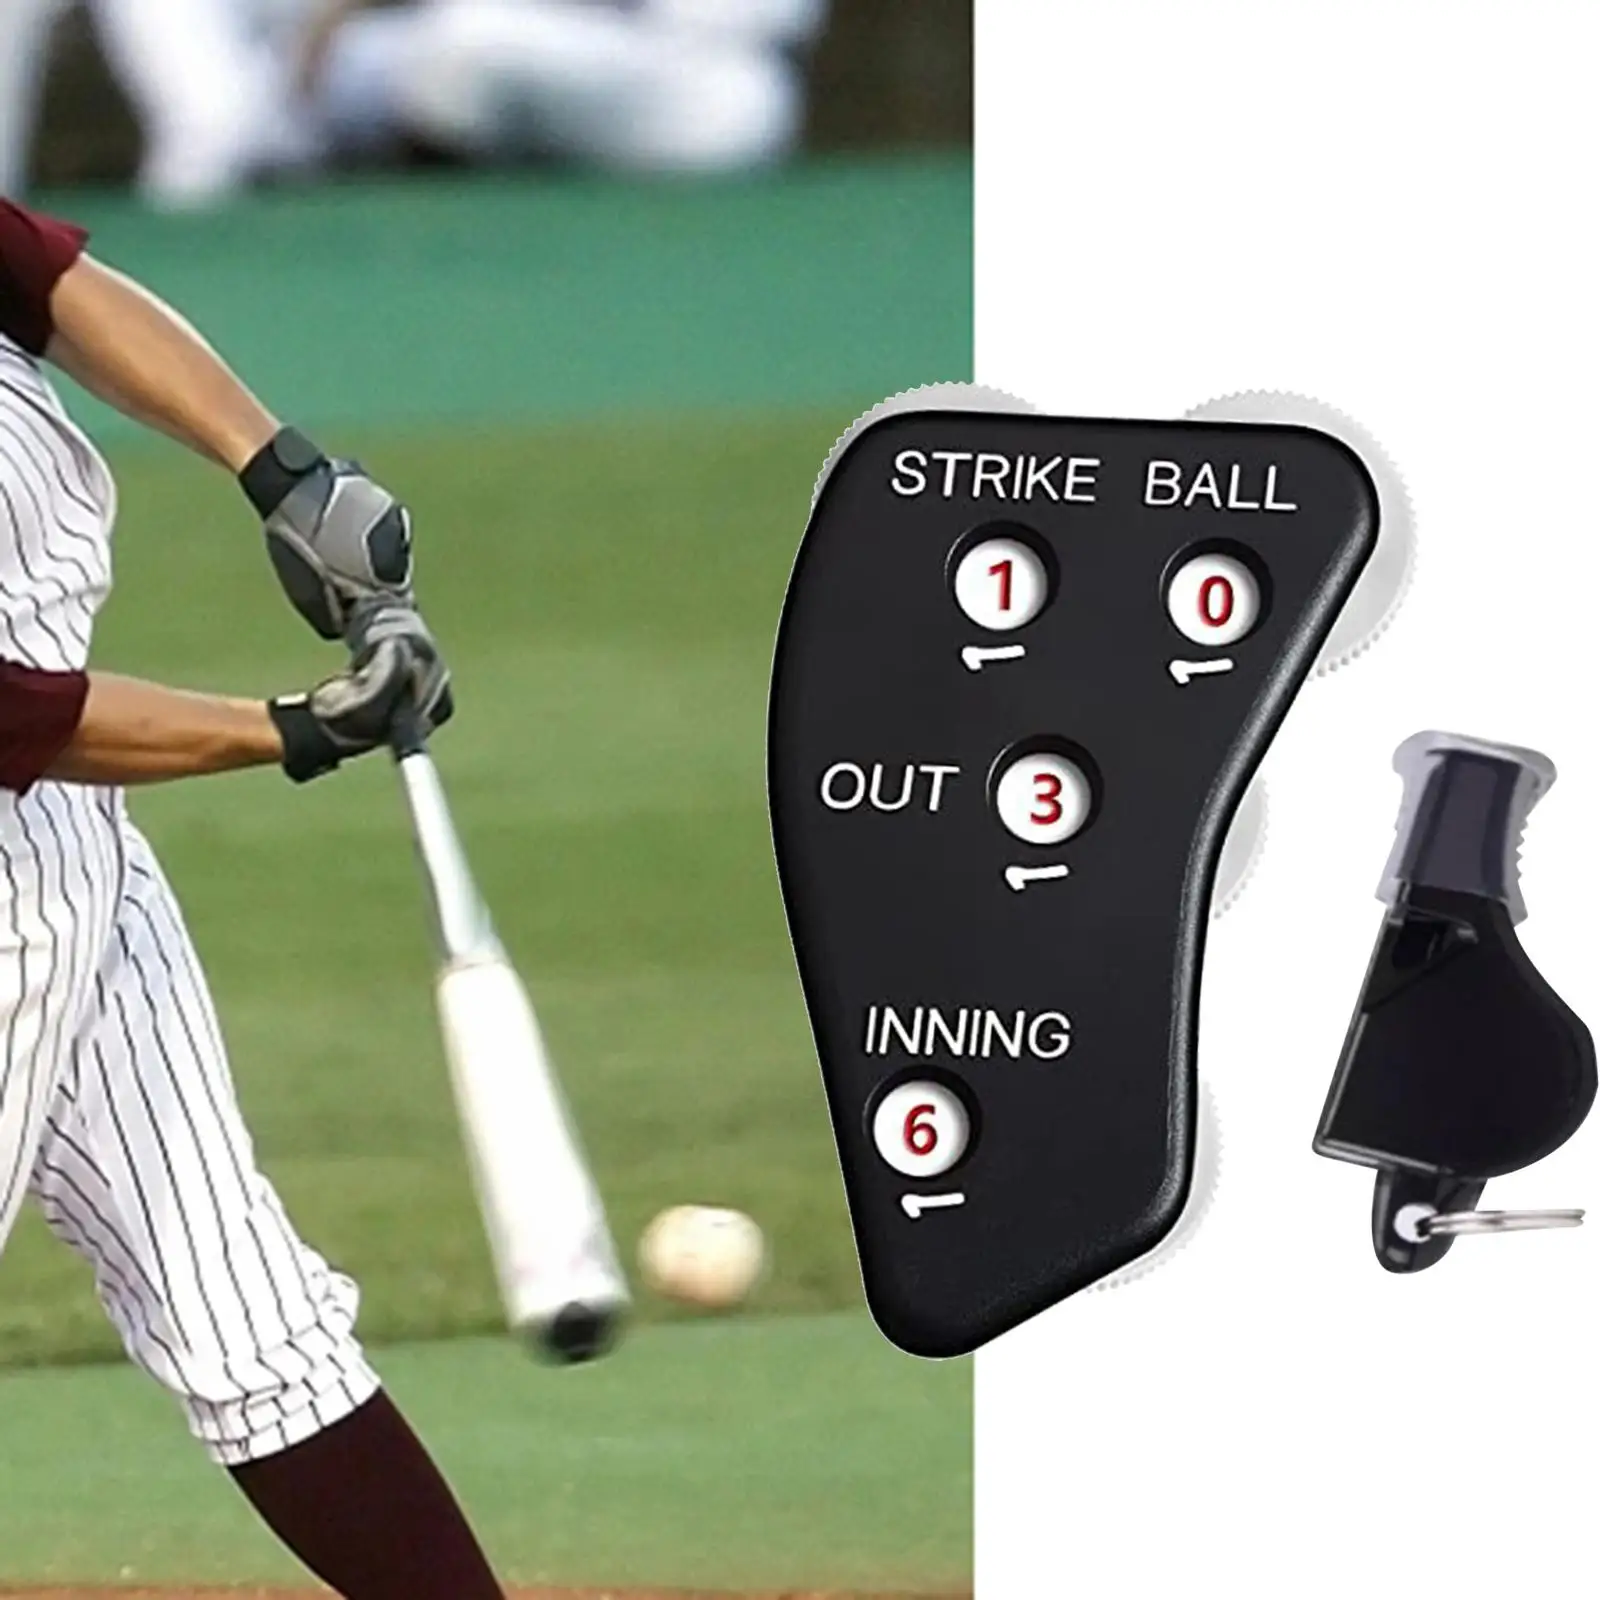 4 Wheel Baseball Umpire Accessories Ball Strike Outs Supplies Score Counter Baseball Umpire Gear Indicator Innings